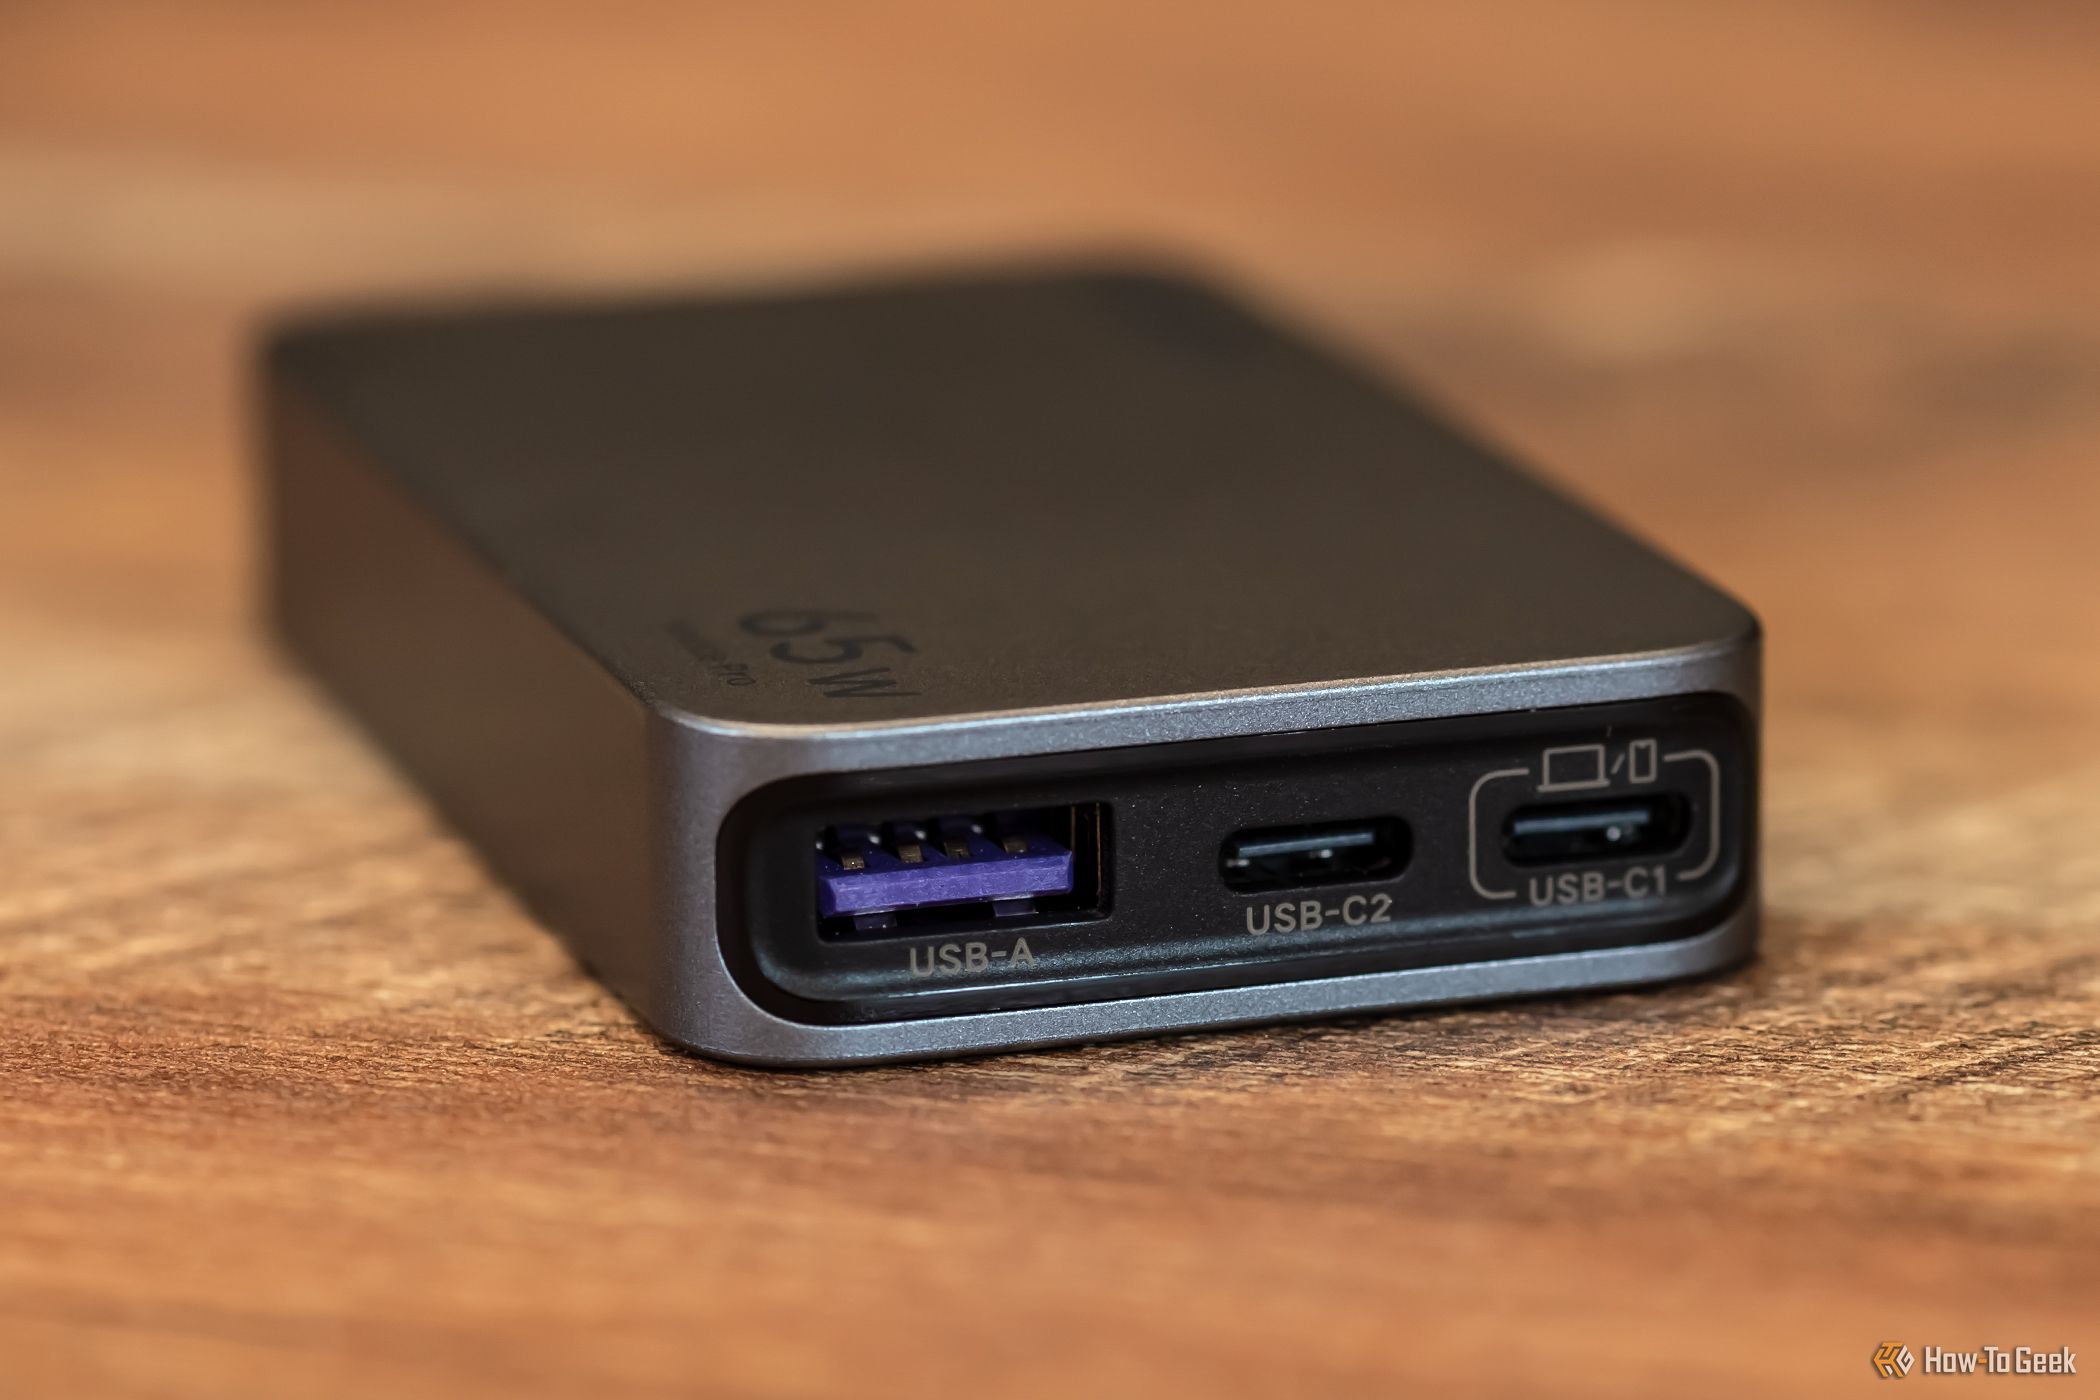 UGREEN releases new 100W USB-C Nexode 20,000mAh portable power bank [Deal]